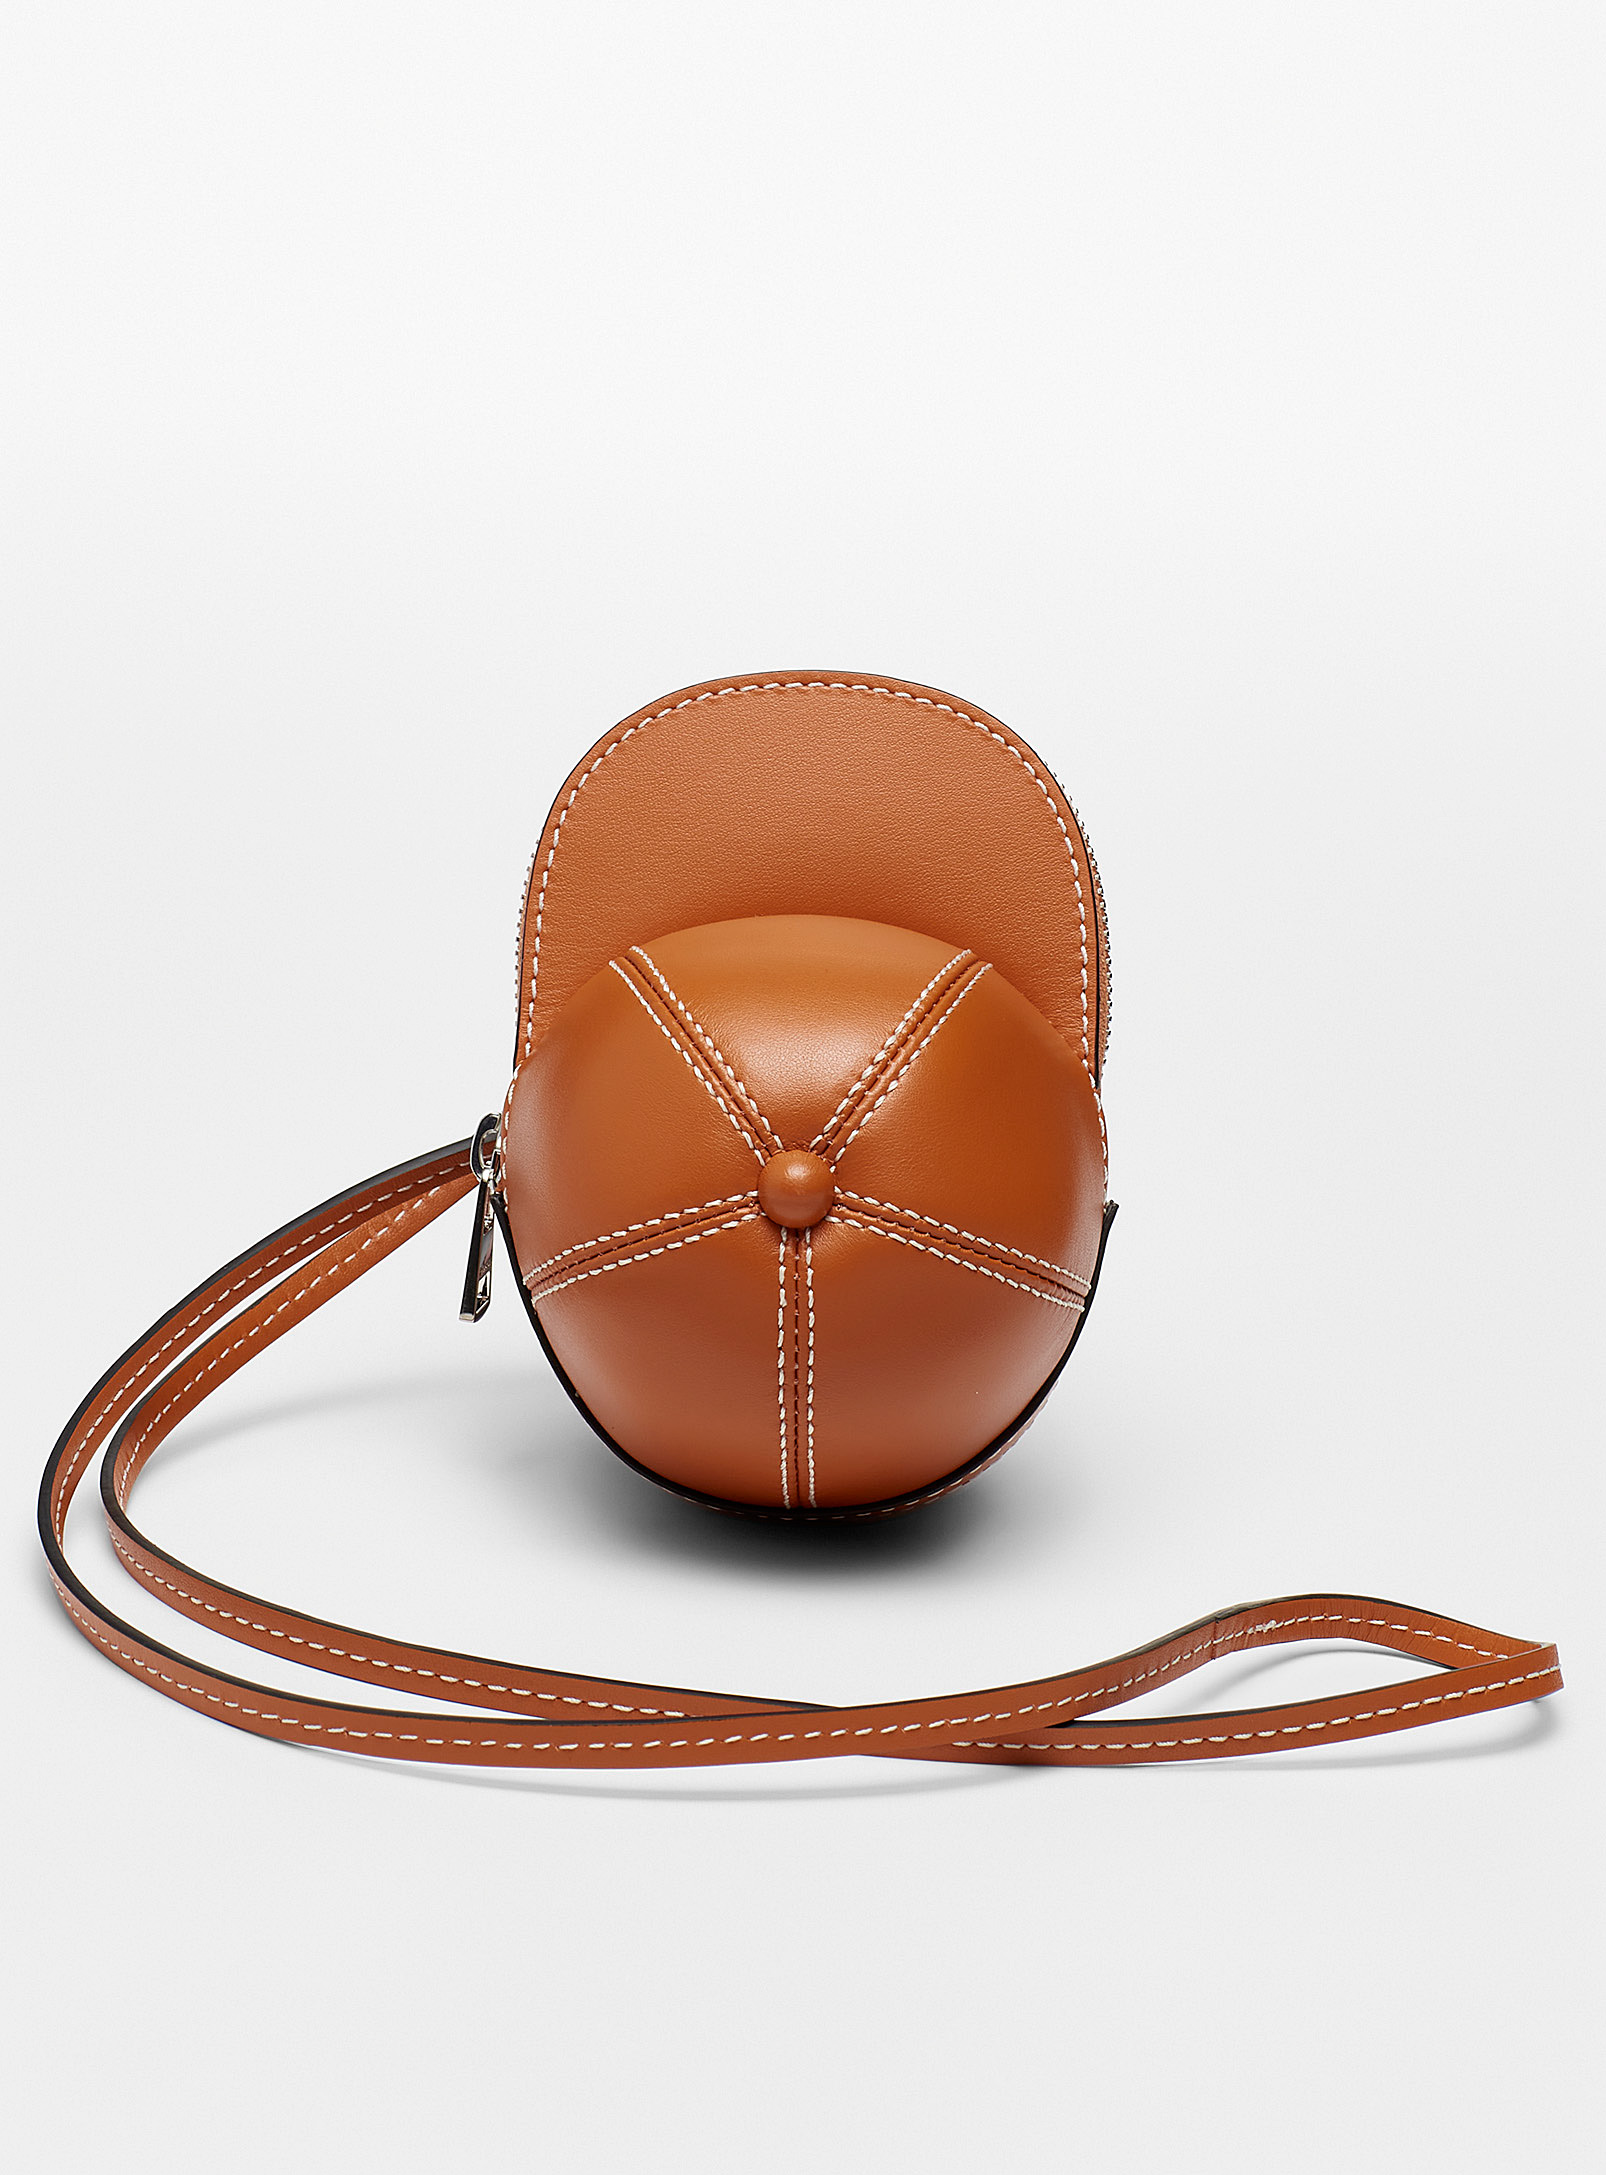 JW Anderson - Men's The Nano leather cap bag (Men, Brown, ONE SIZE